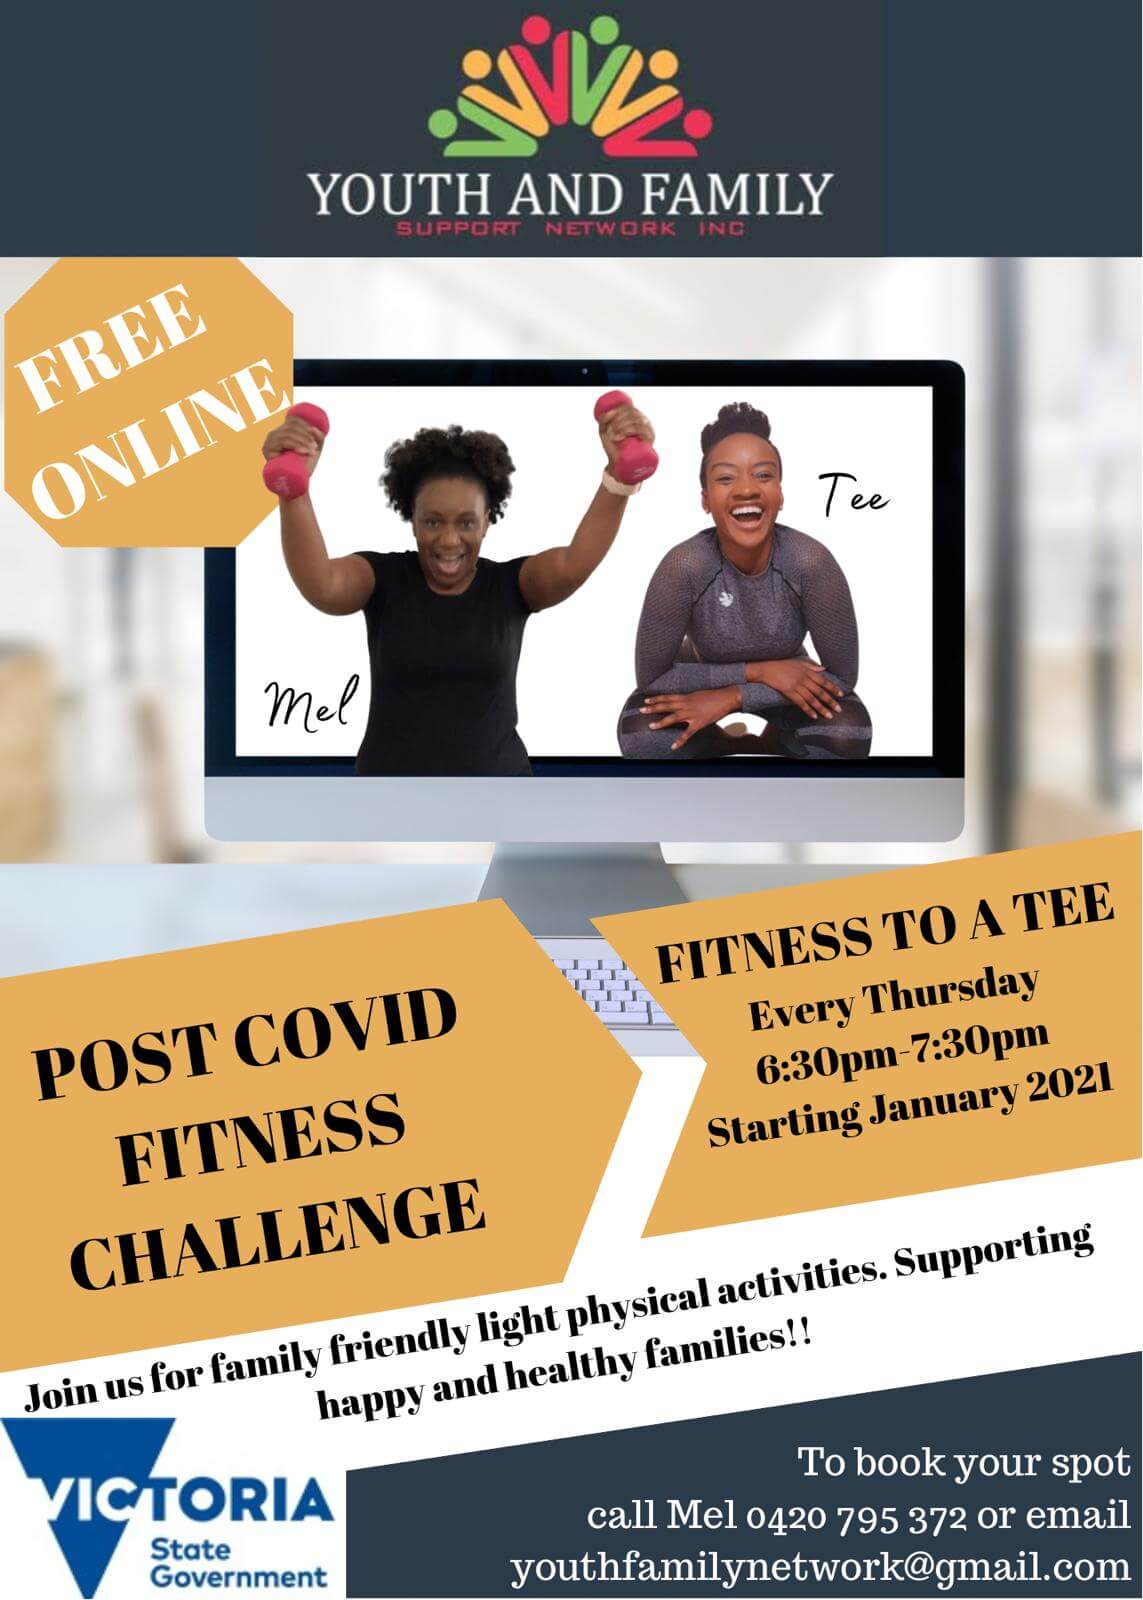 Post-COVID fitness challenge